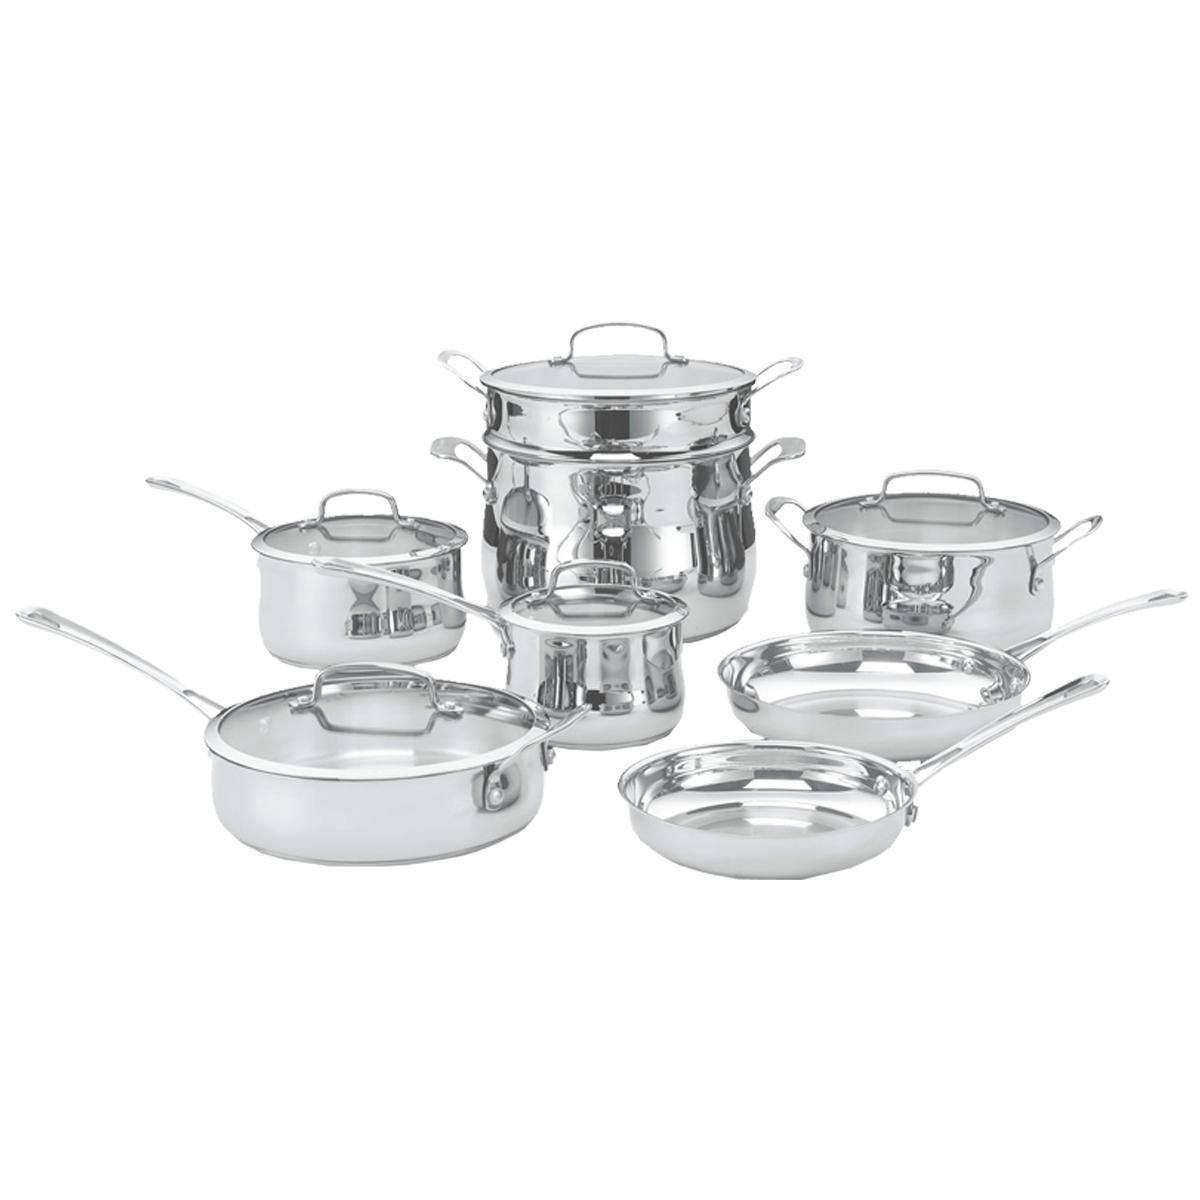 Cuisinart 13 Piece Contour Stainless Cookware Set | Walmart Canada Cuisinart Tri-ply Pro Stainless Steel 13-piece Cookware Set